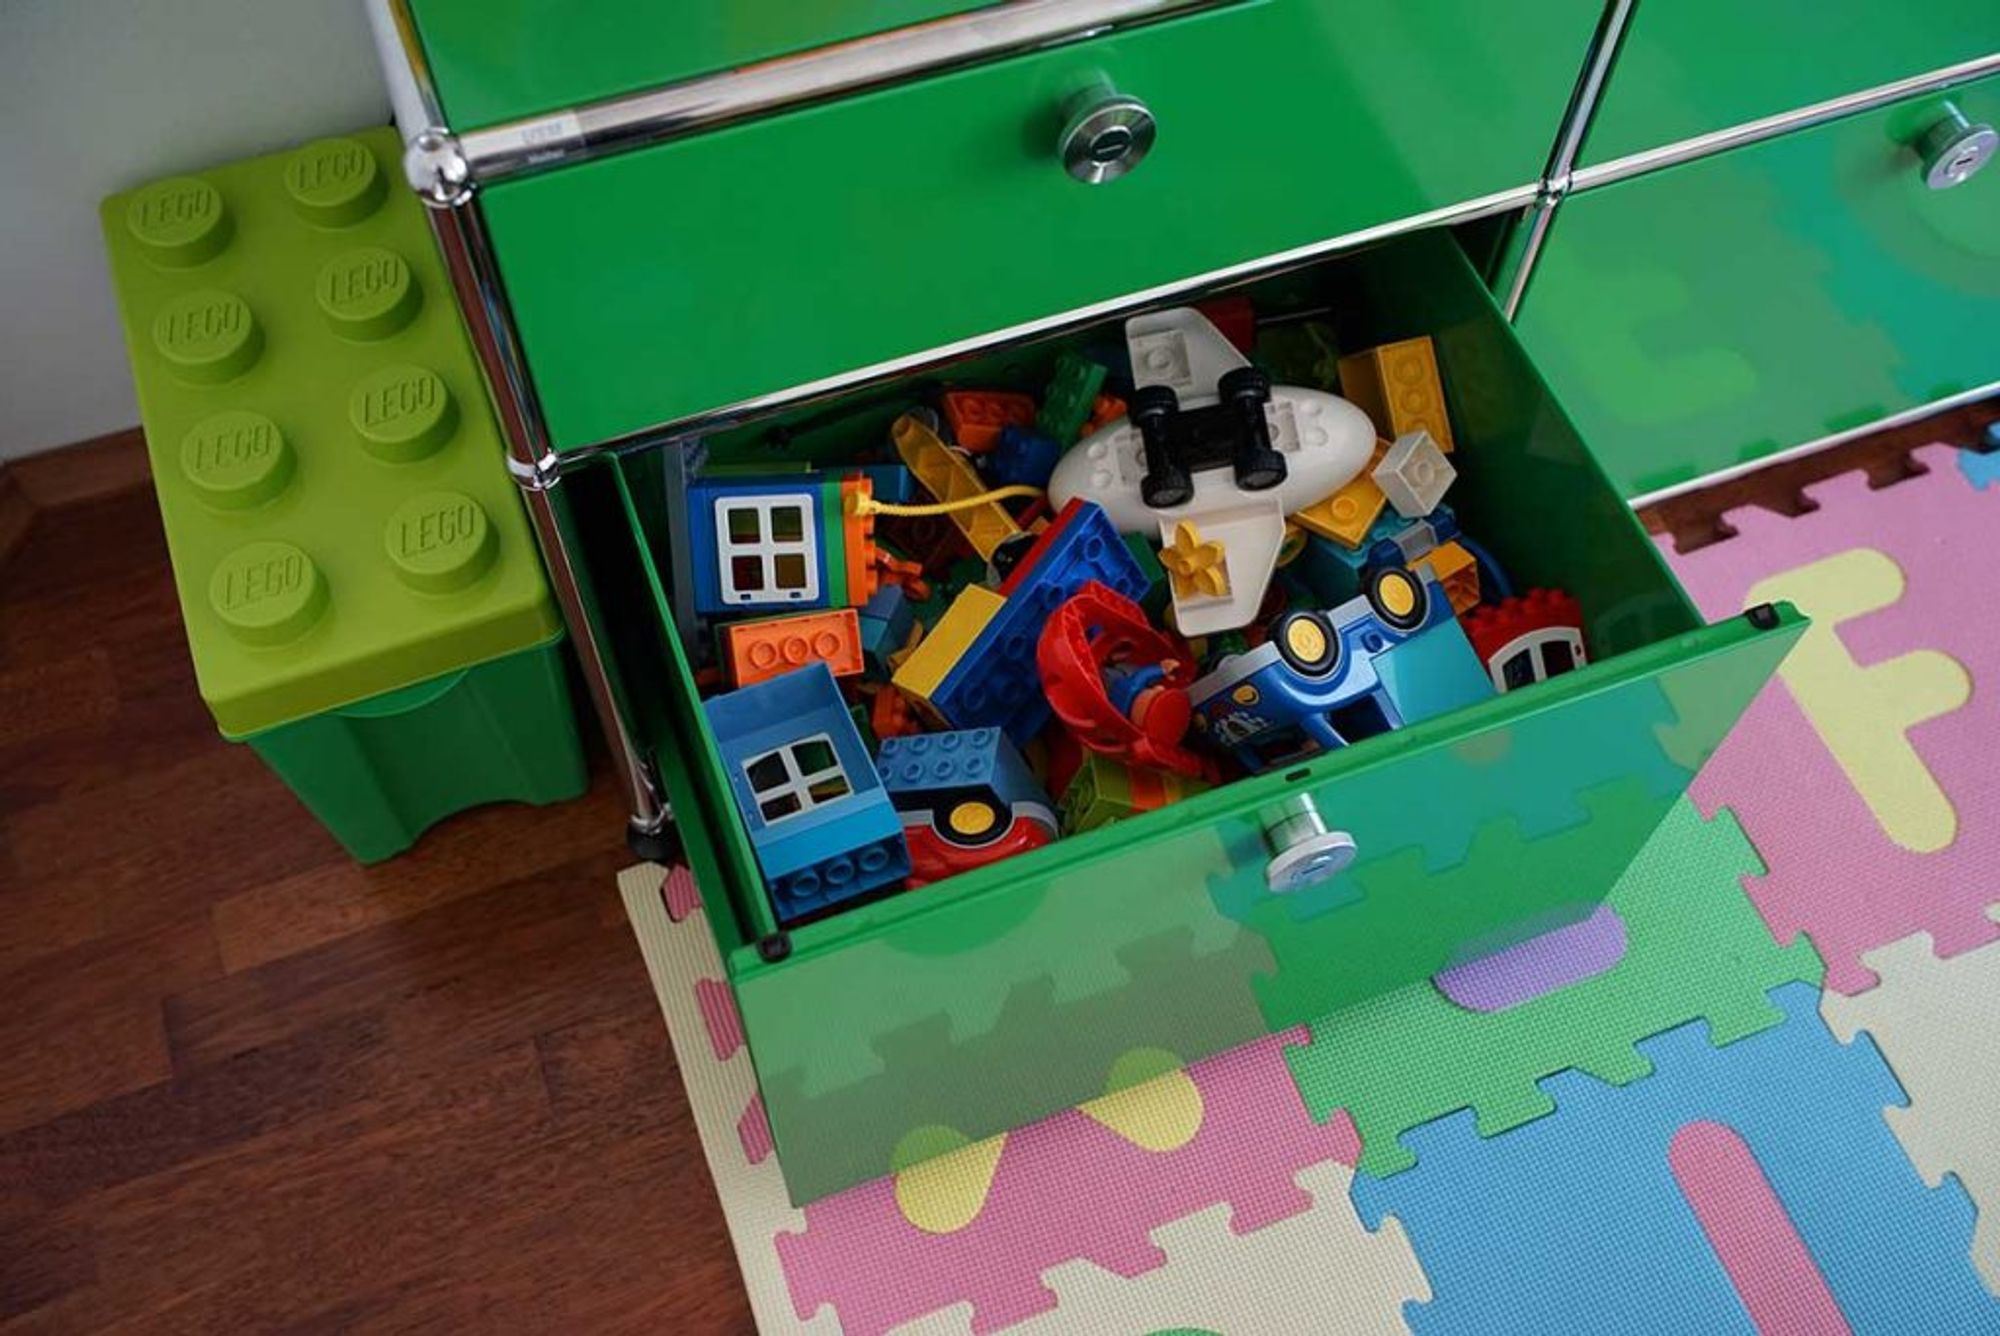 A USM cabinet is used to store colorful LEGO blocks. Image courtesy: USM Switzerland.